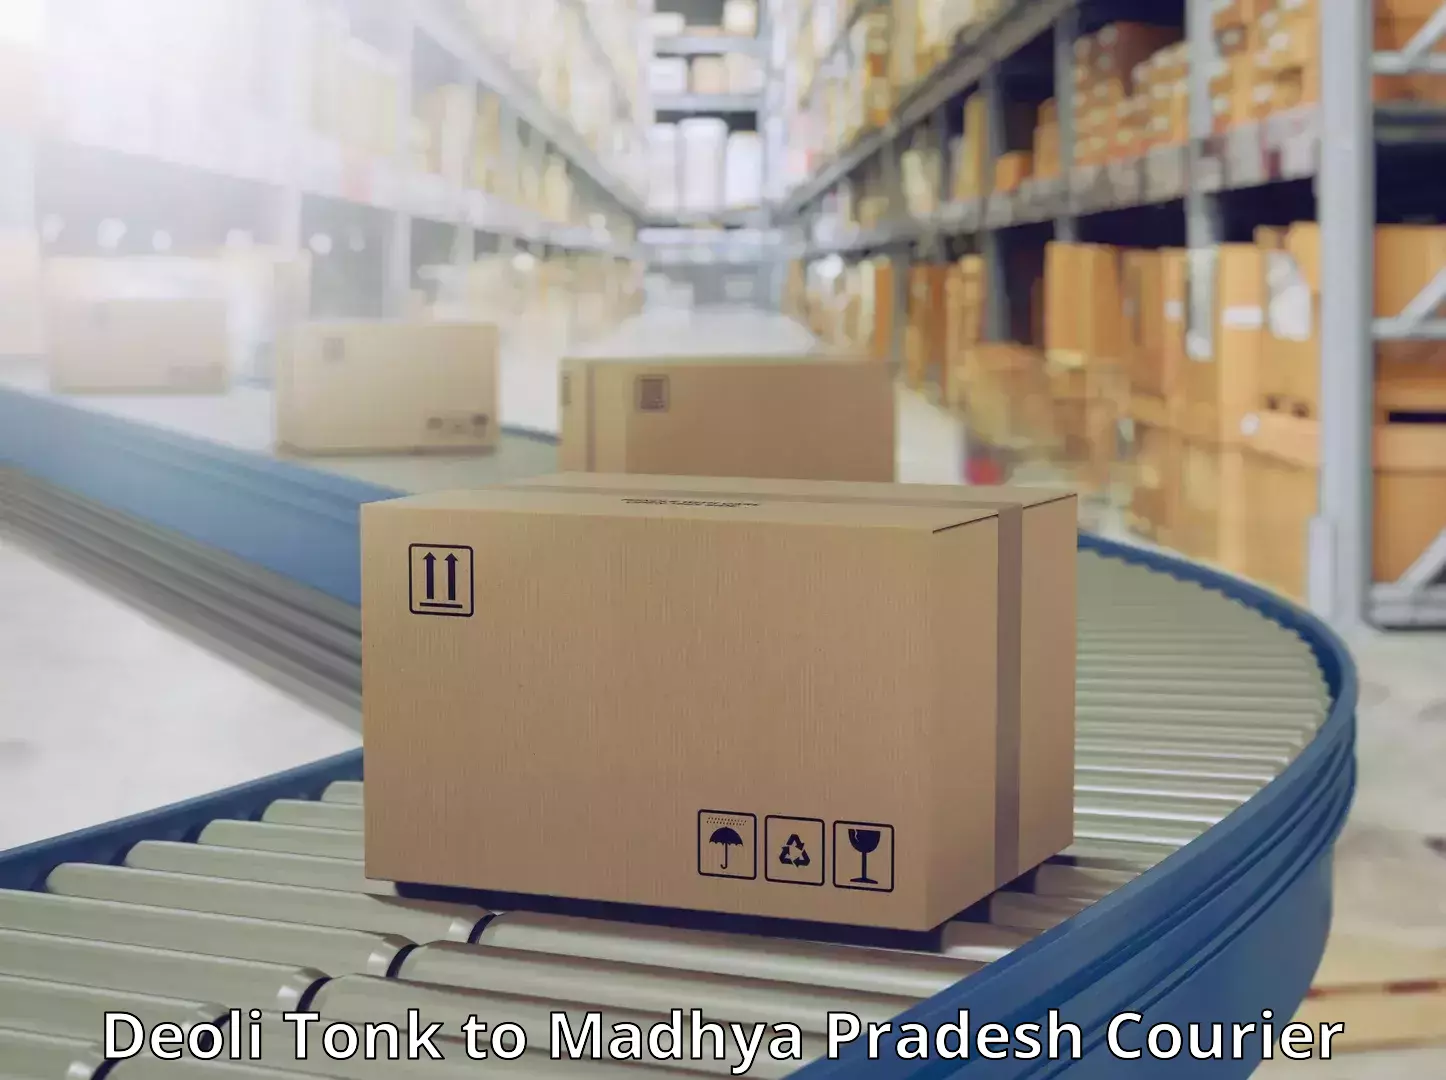 Versatile courier options Deoli Tonk to Madhya Pradesh